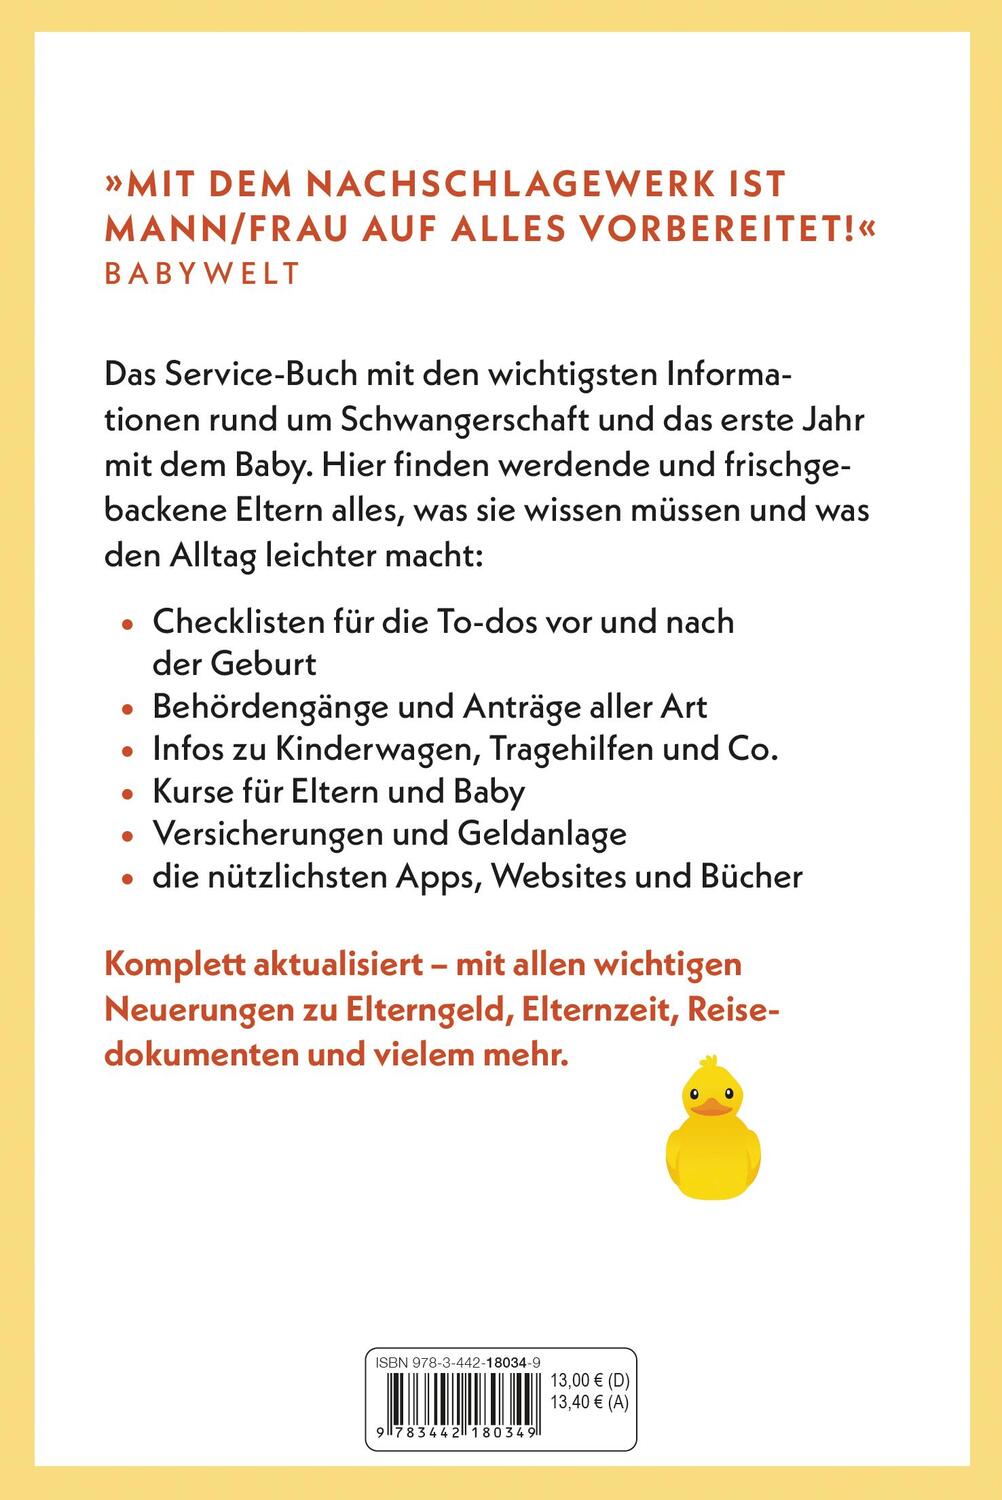 Bild: 9783442180349 | Babypedia | Anne Nina Simoens (u. a.) | Taschenbuch | 400 S. | Deutsch